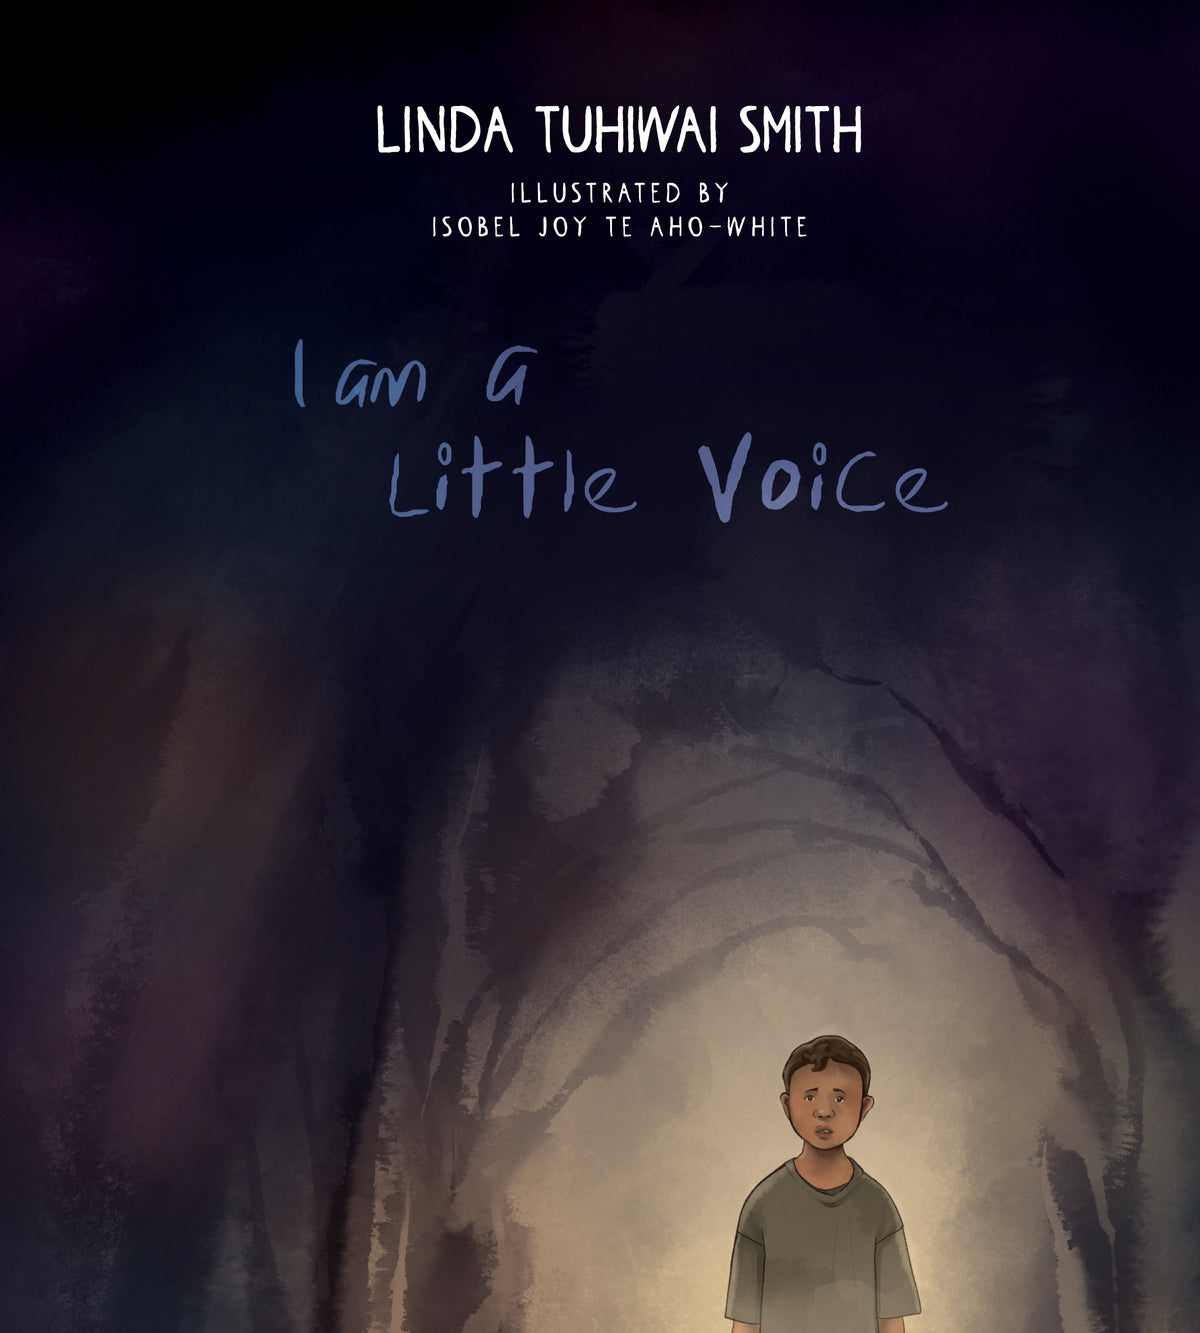 I am a Little Voice